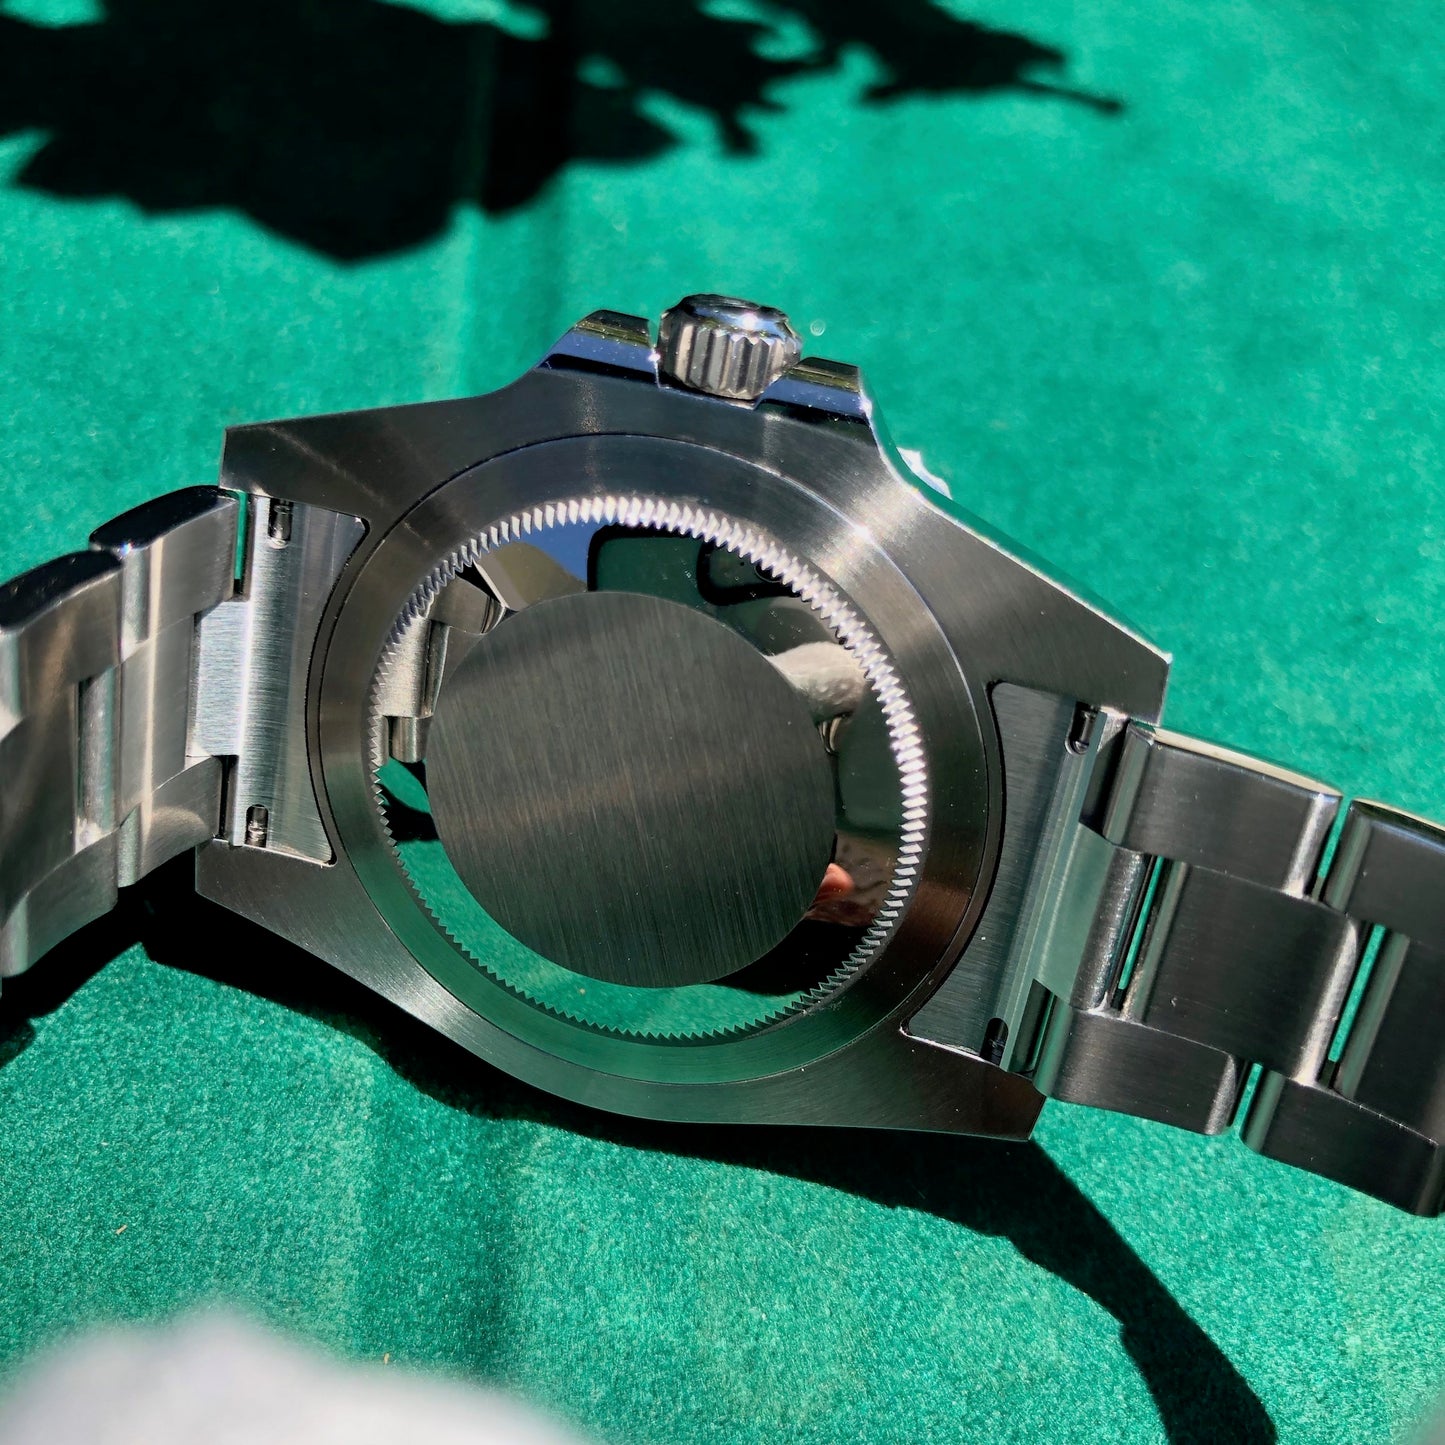 Rolex GMT Master II 116710 BLNR Batman Ceramic Steel Automatic Wristwatch Box Papers - Hashtag Watch Company